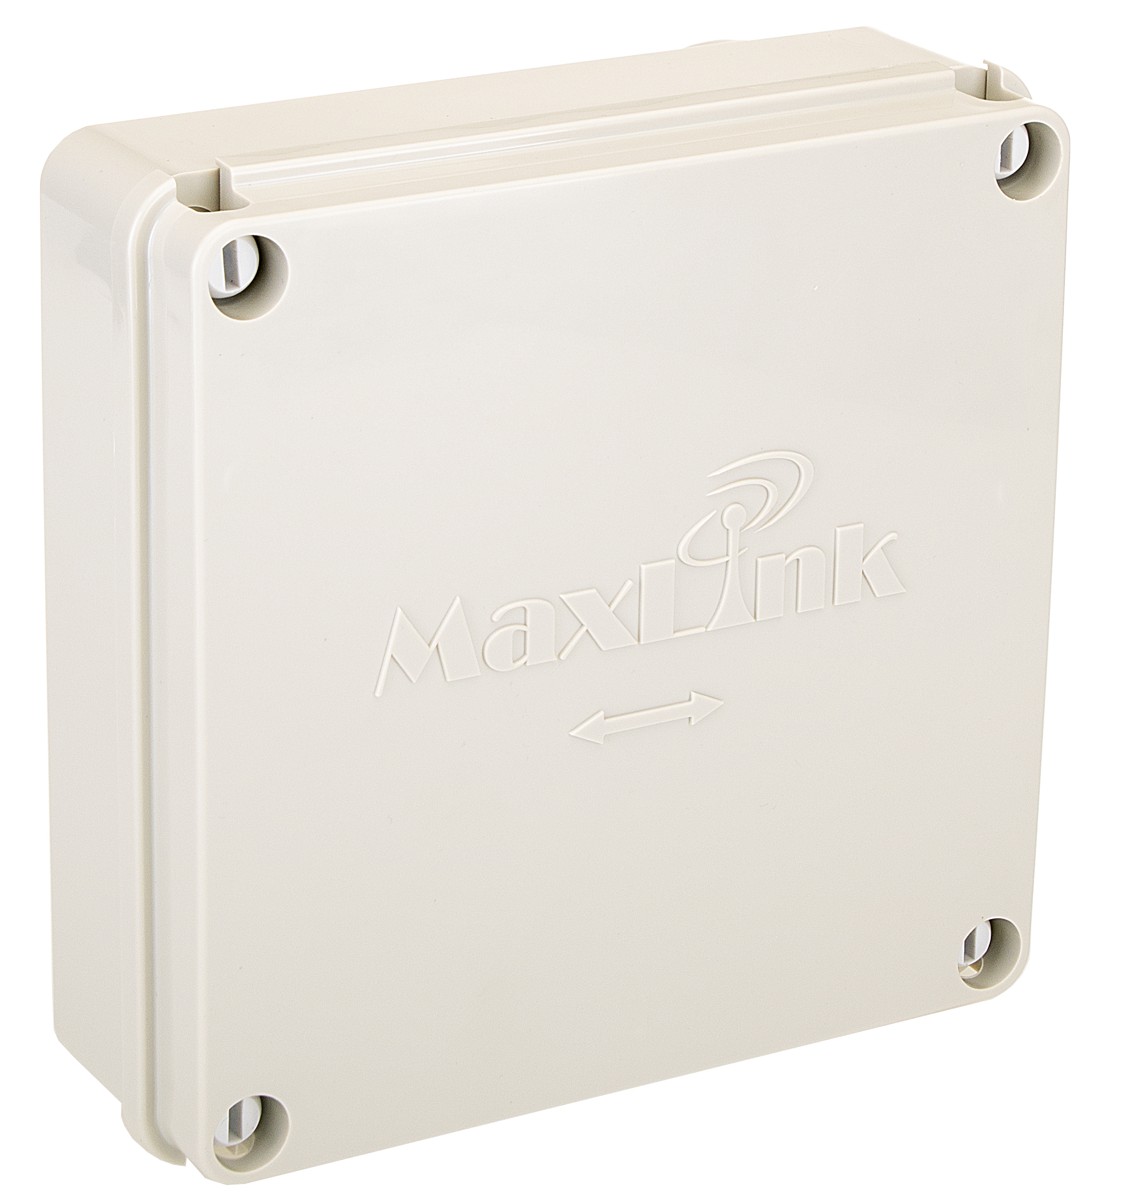 MaxLink MaxBox outdoor box